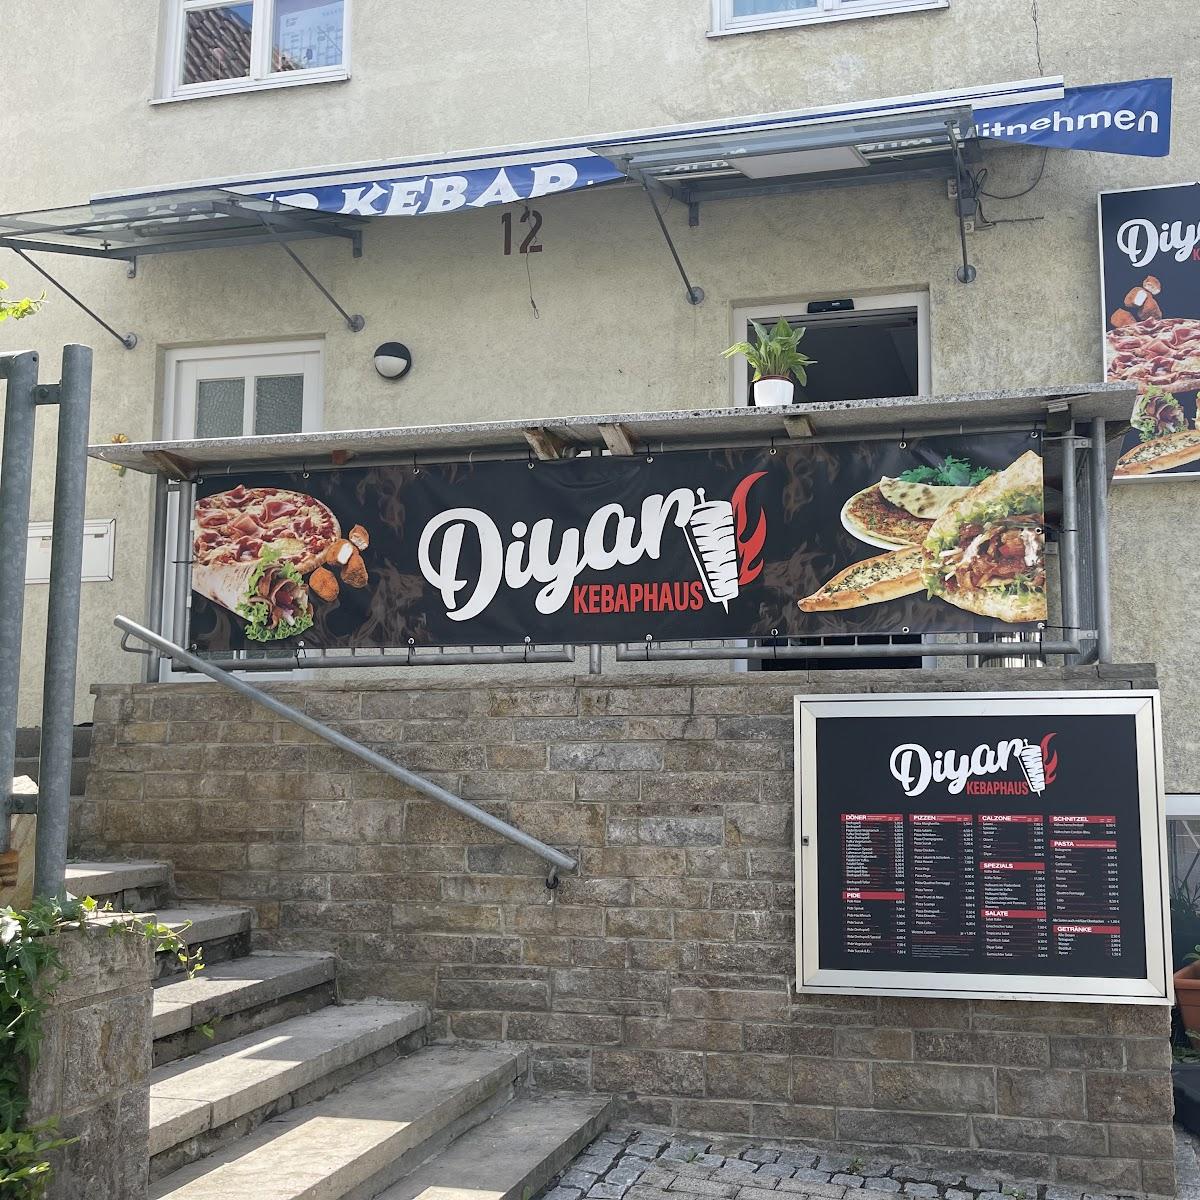 Restaurant "Diyar kebaphaus" in Pleidelsheim